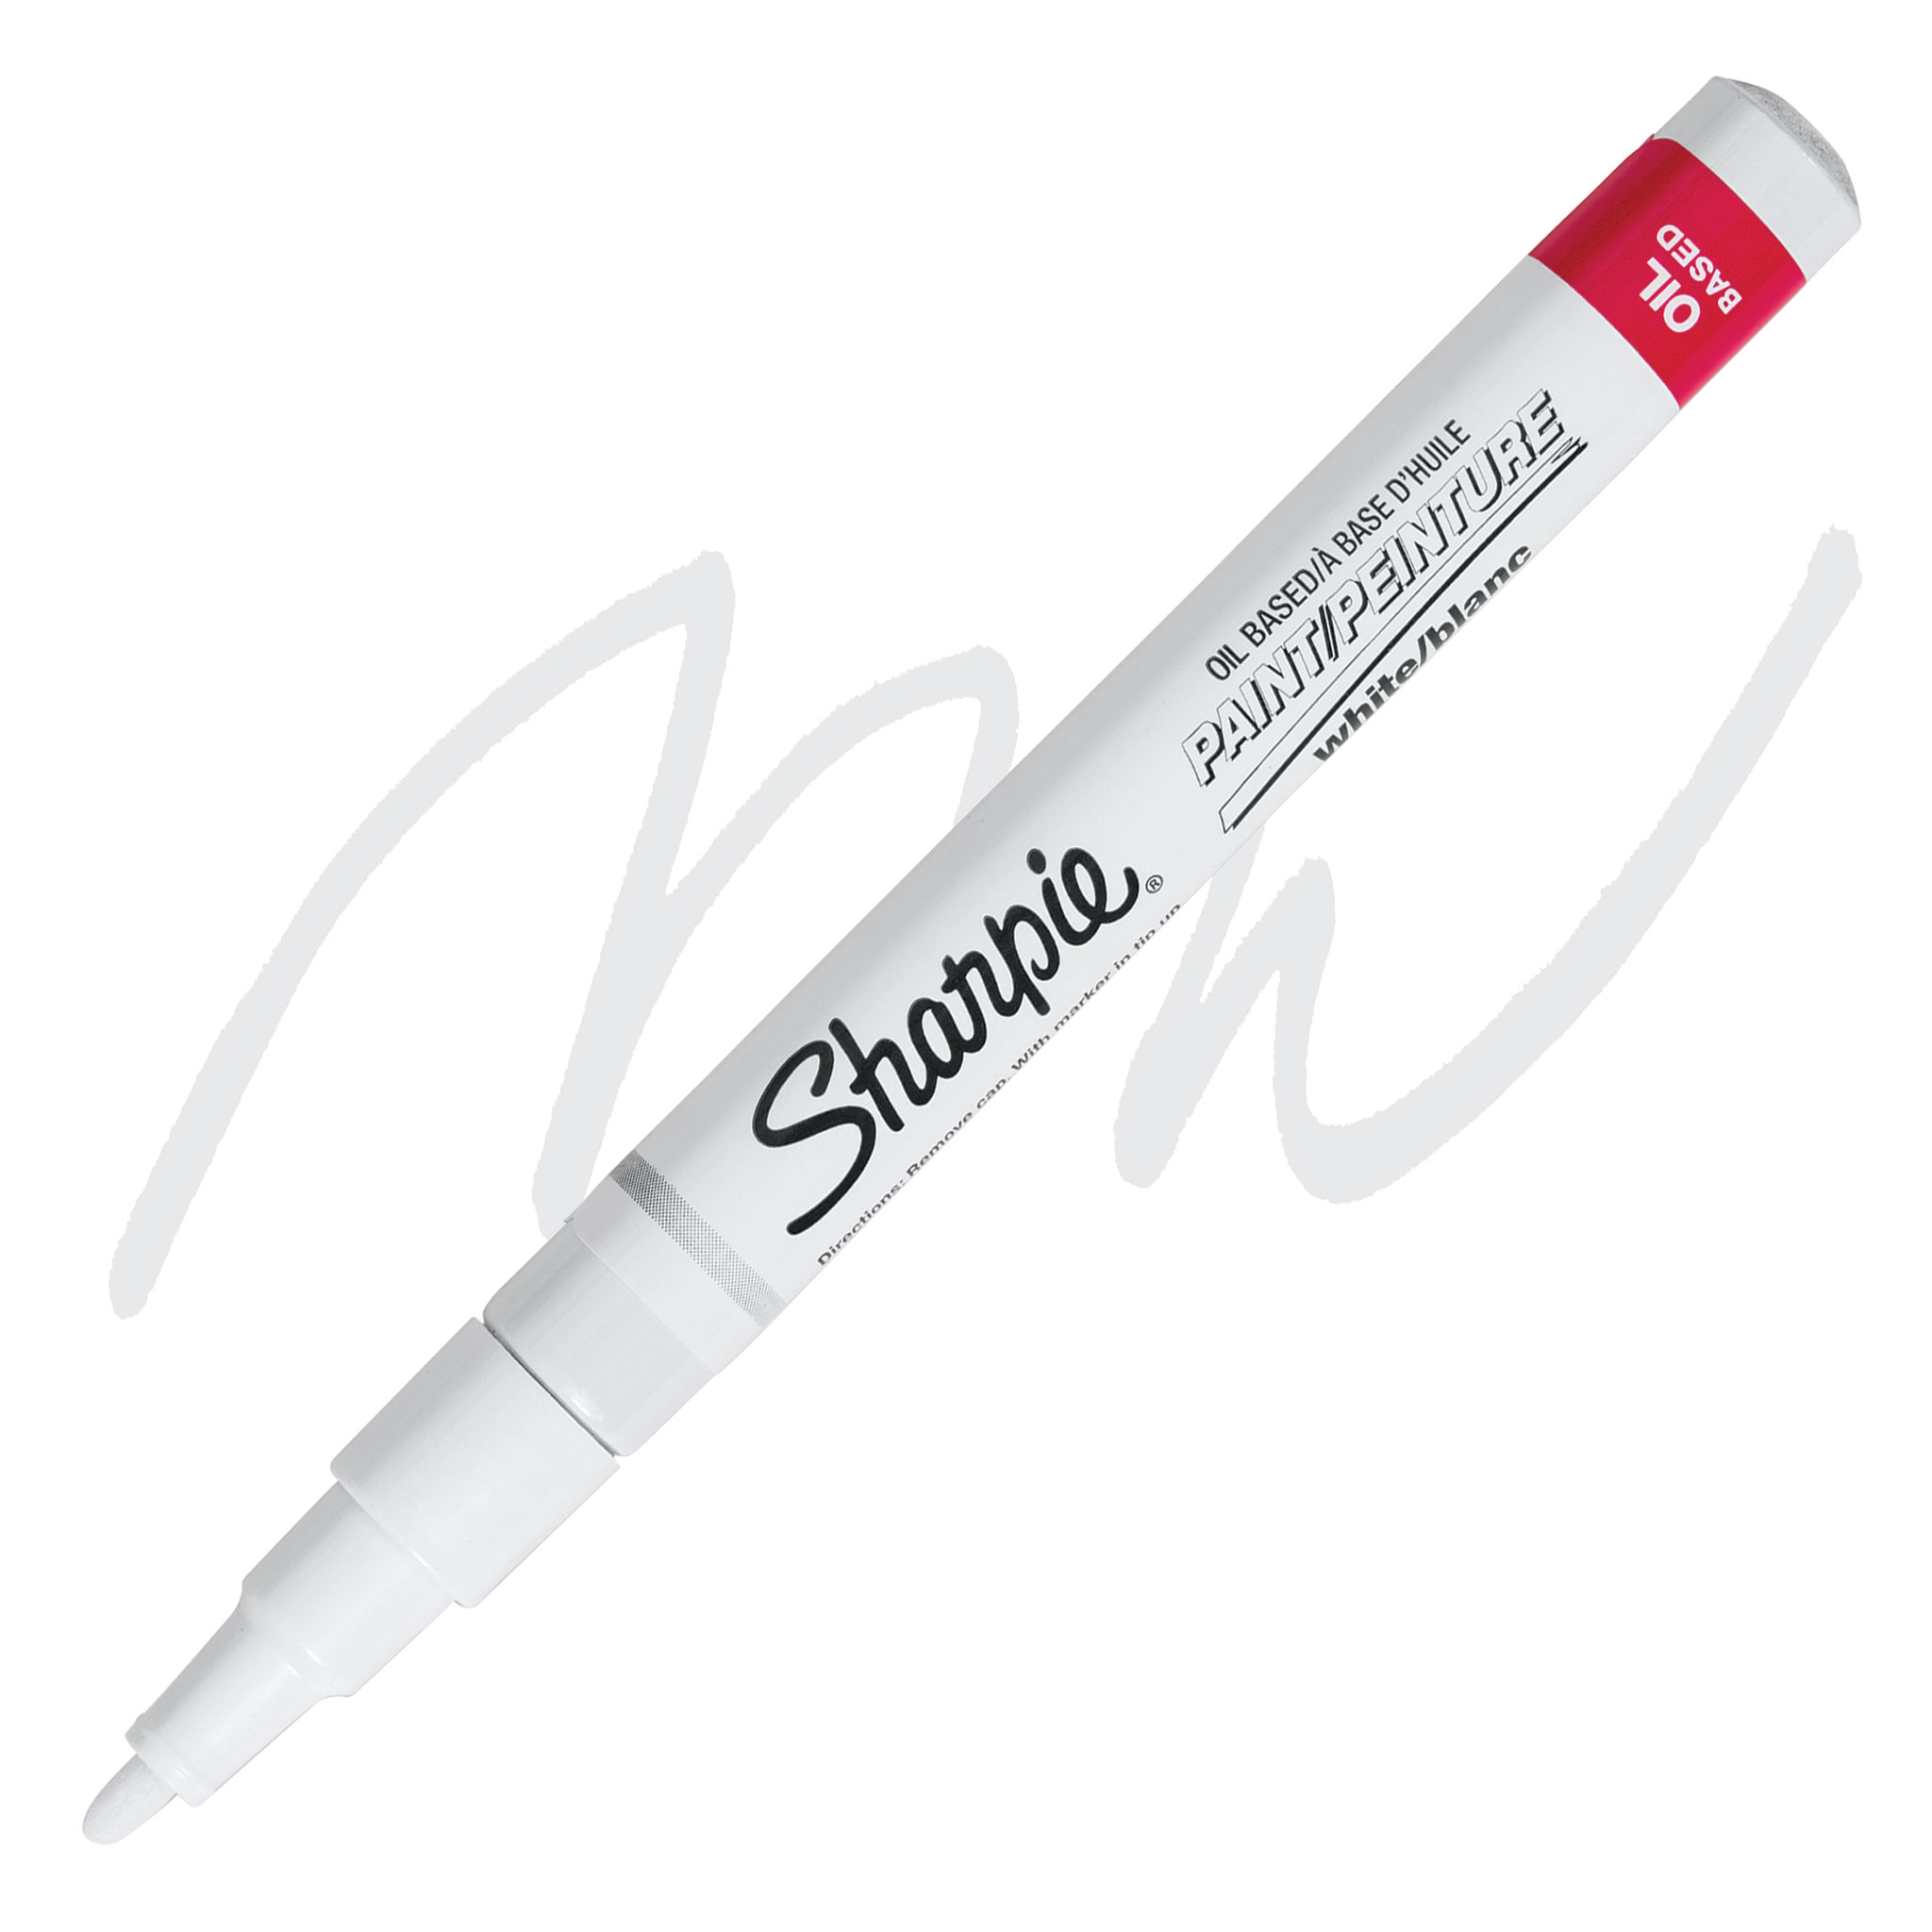 Sharpie Oil-Based Paint Marker - Red, Medium Point